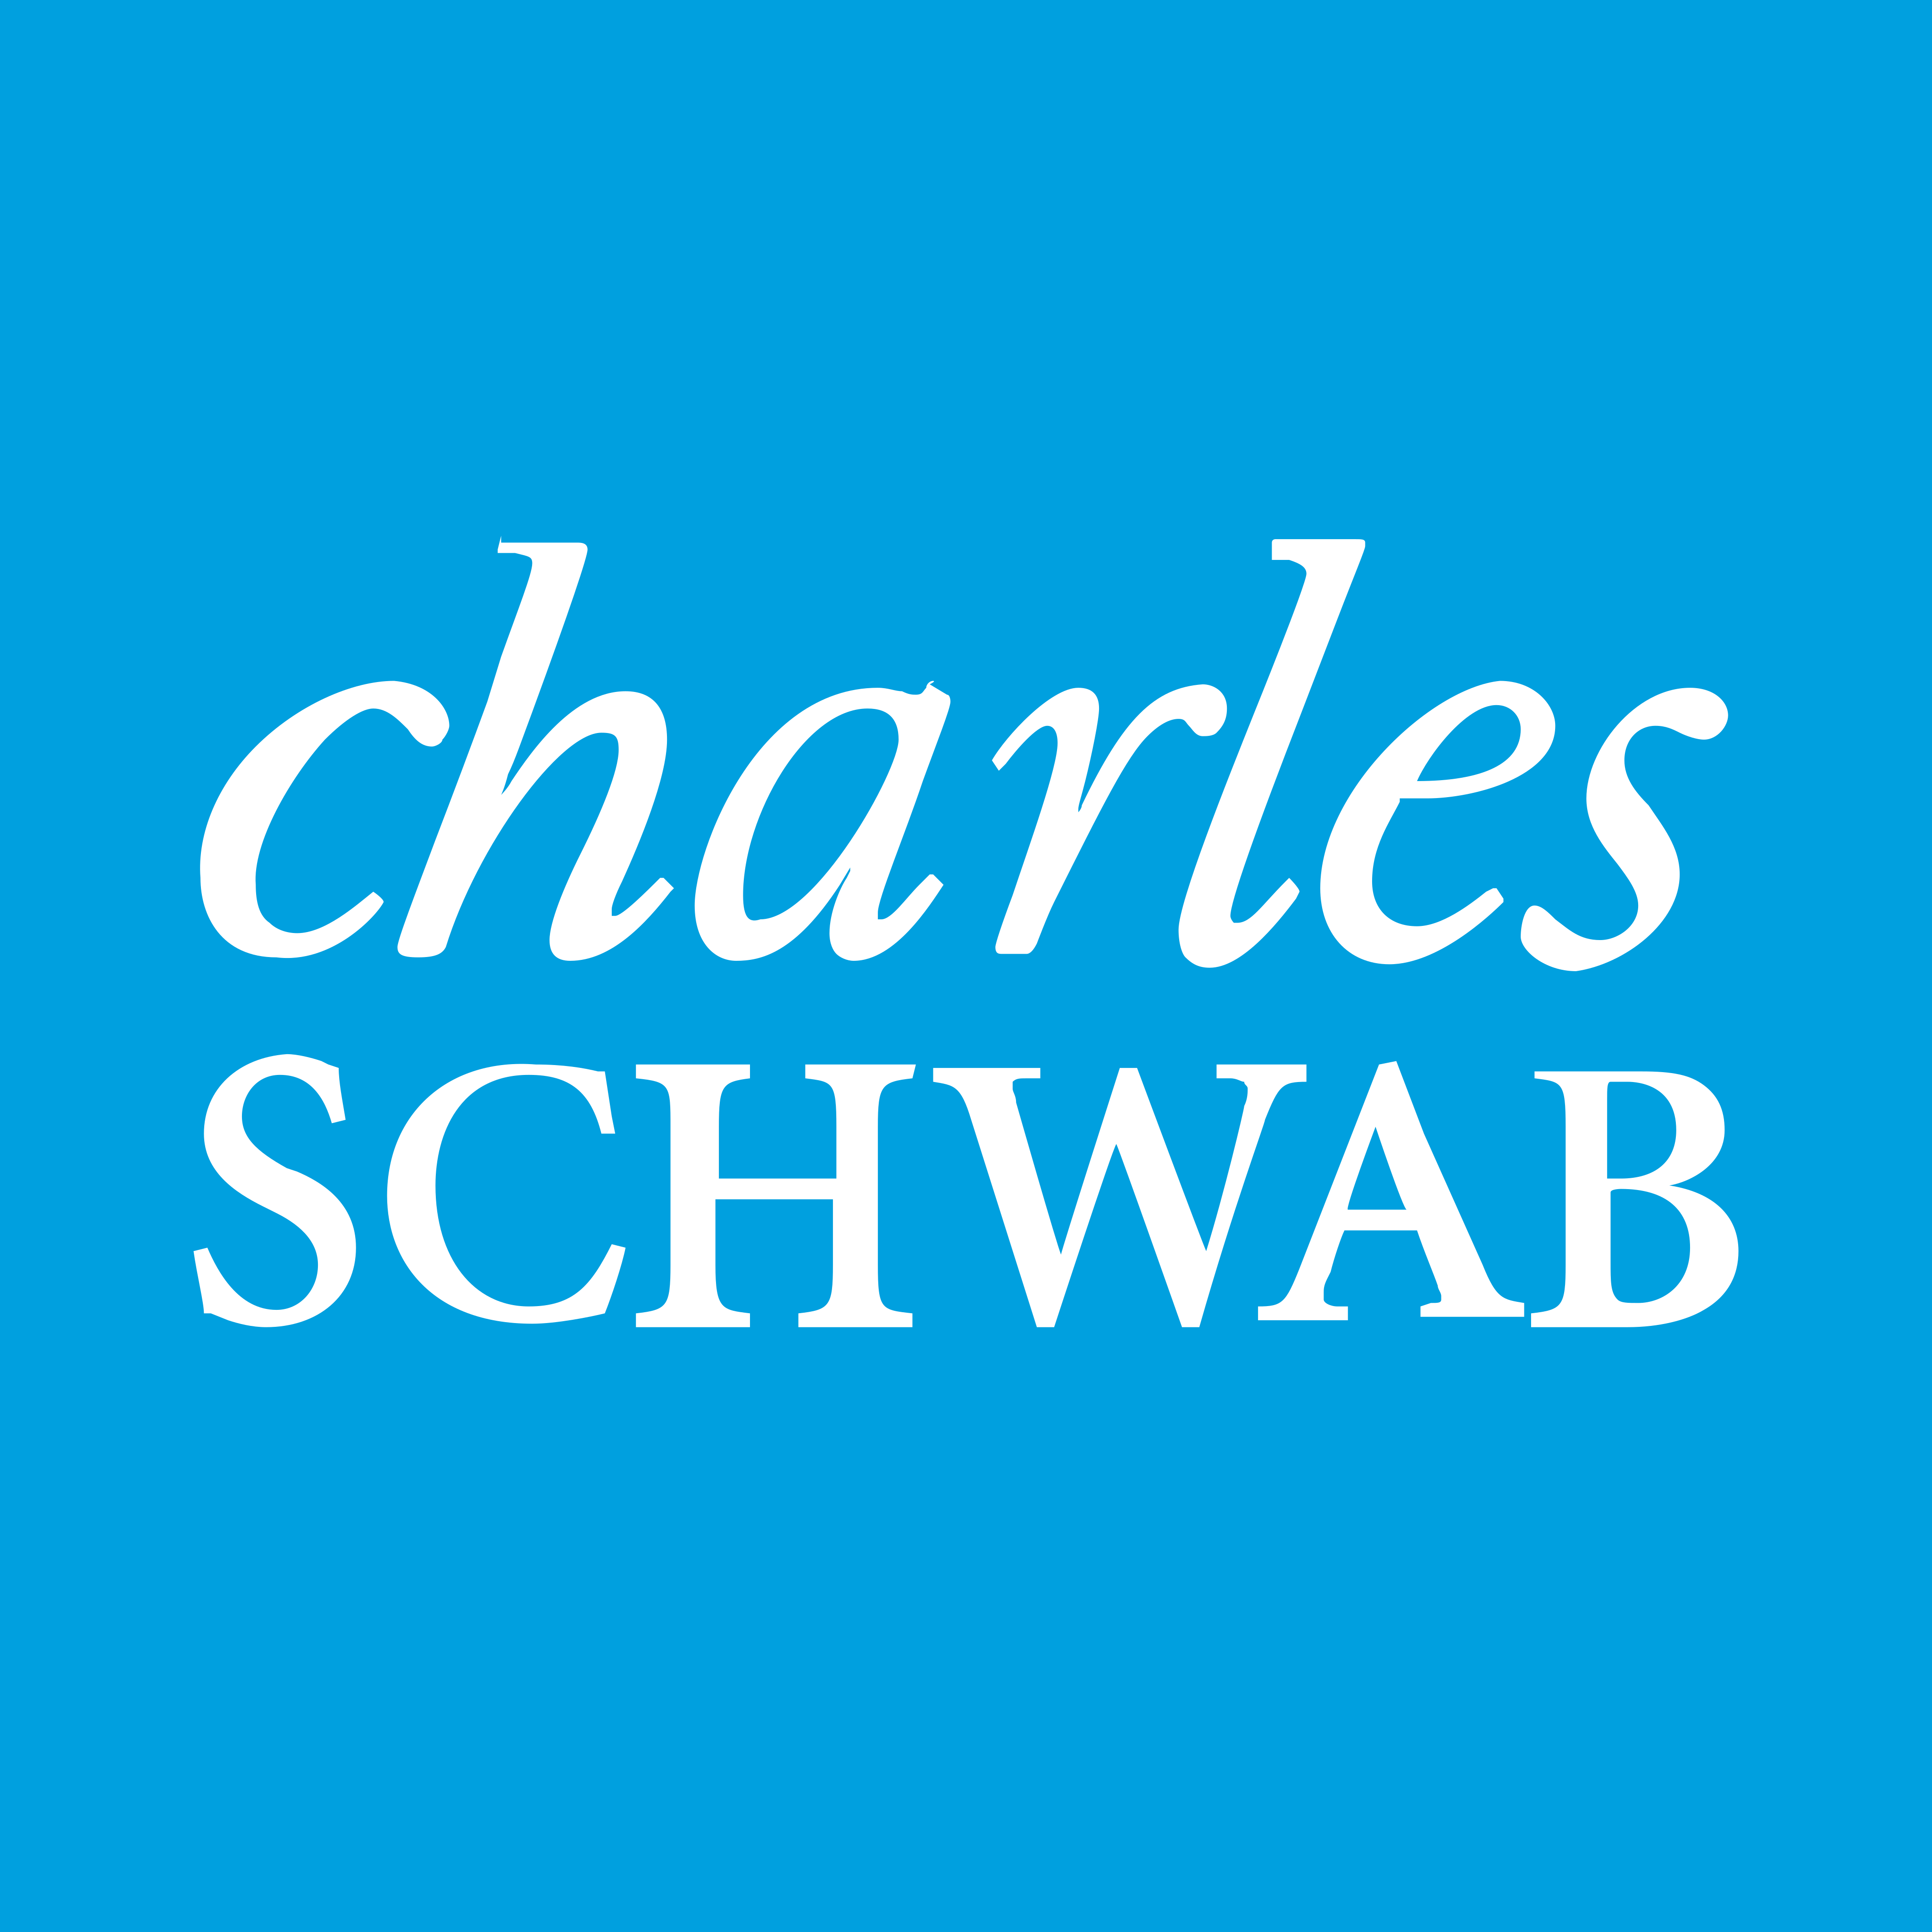 charles schwab logo - Charles Schwab Logo